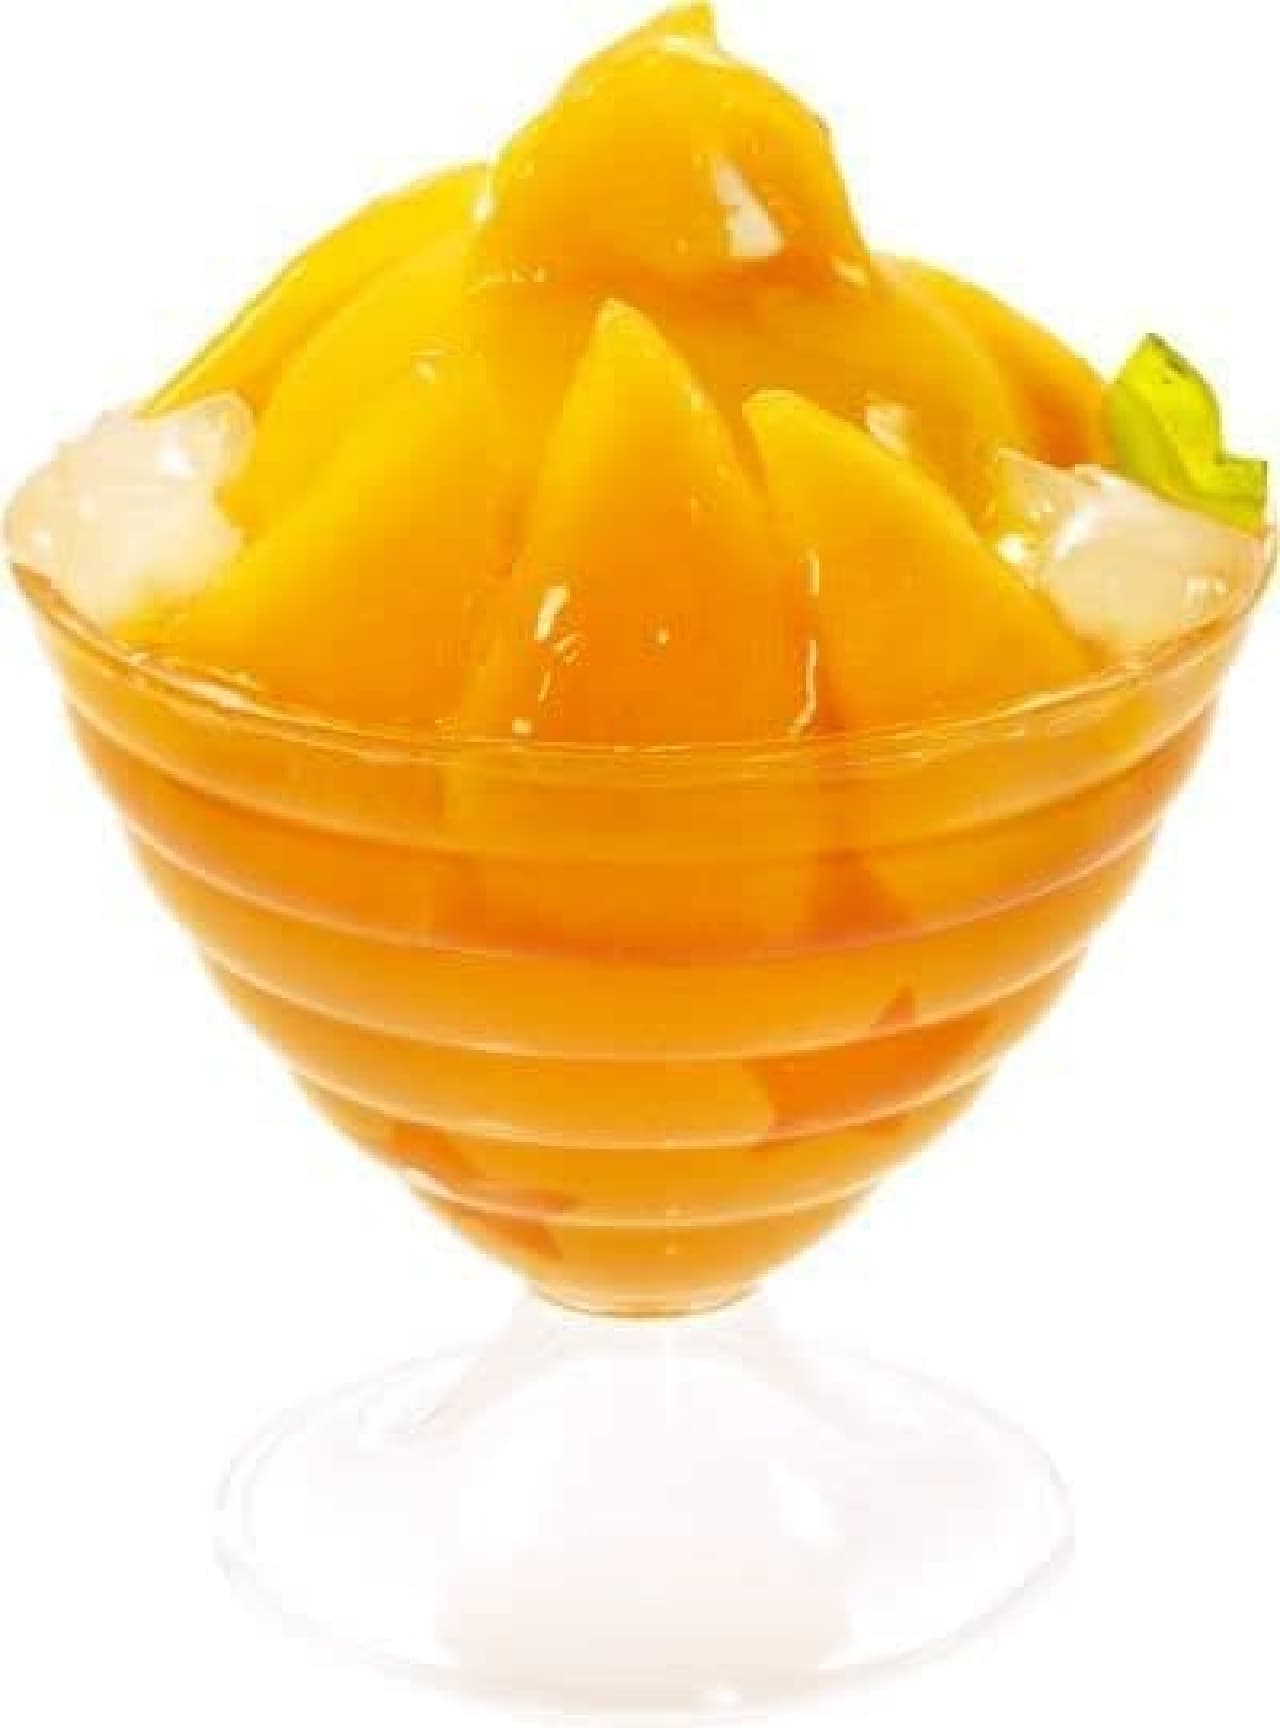 "Mango pudding" is a parfait made with mango